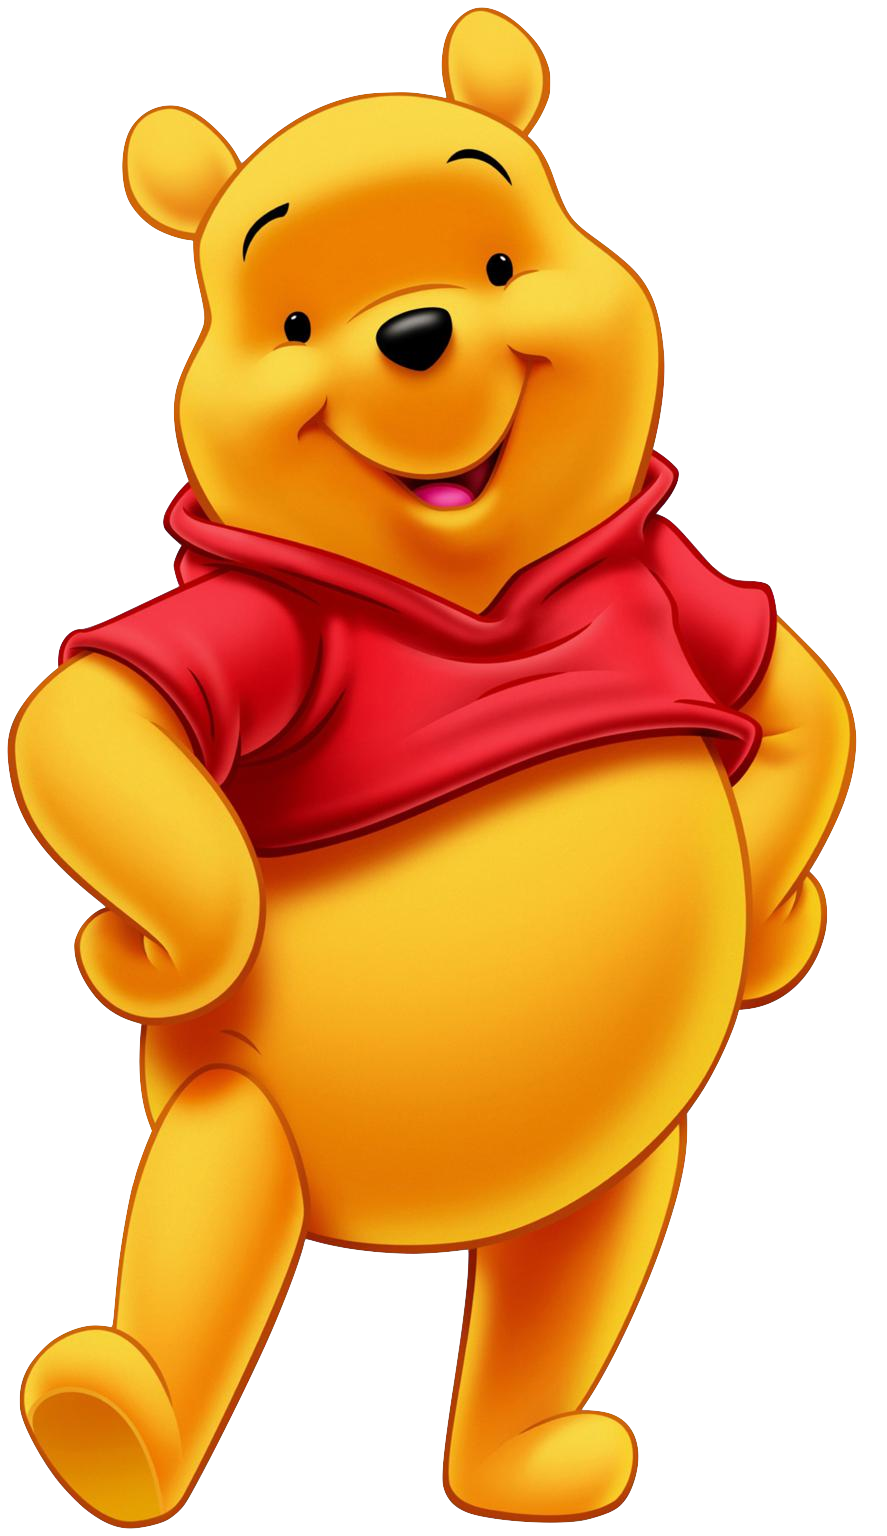 Winniethe Pooh